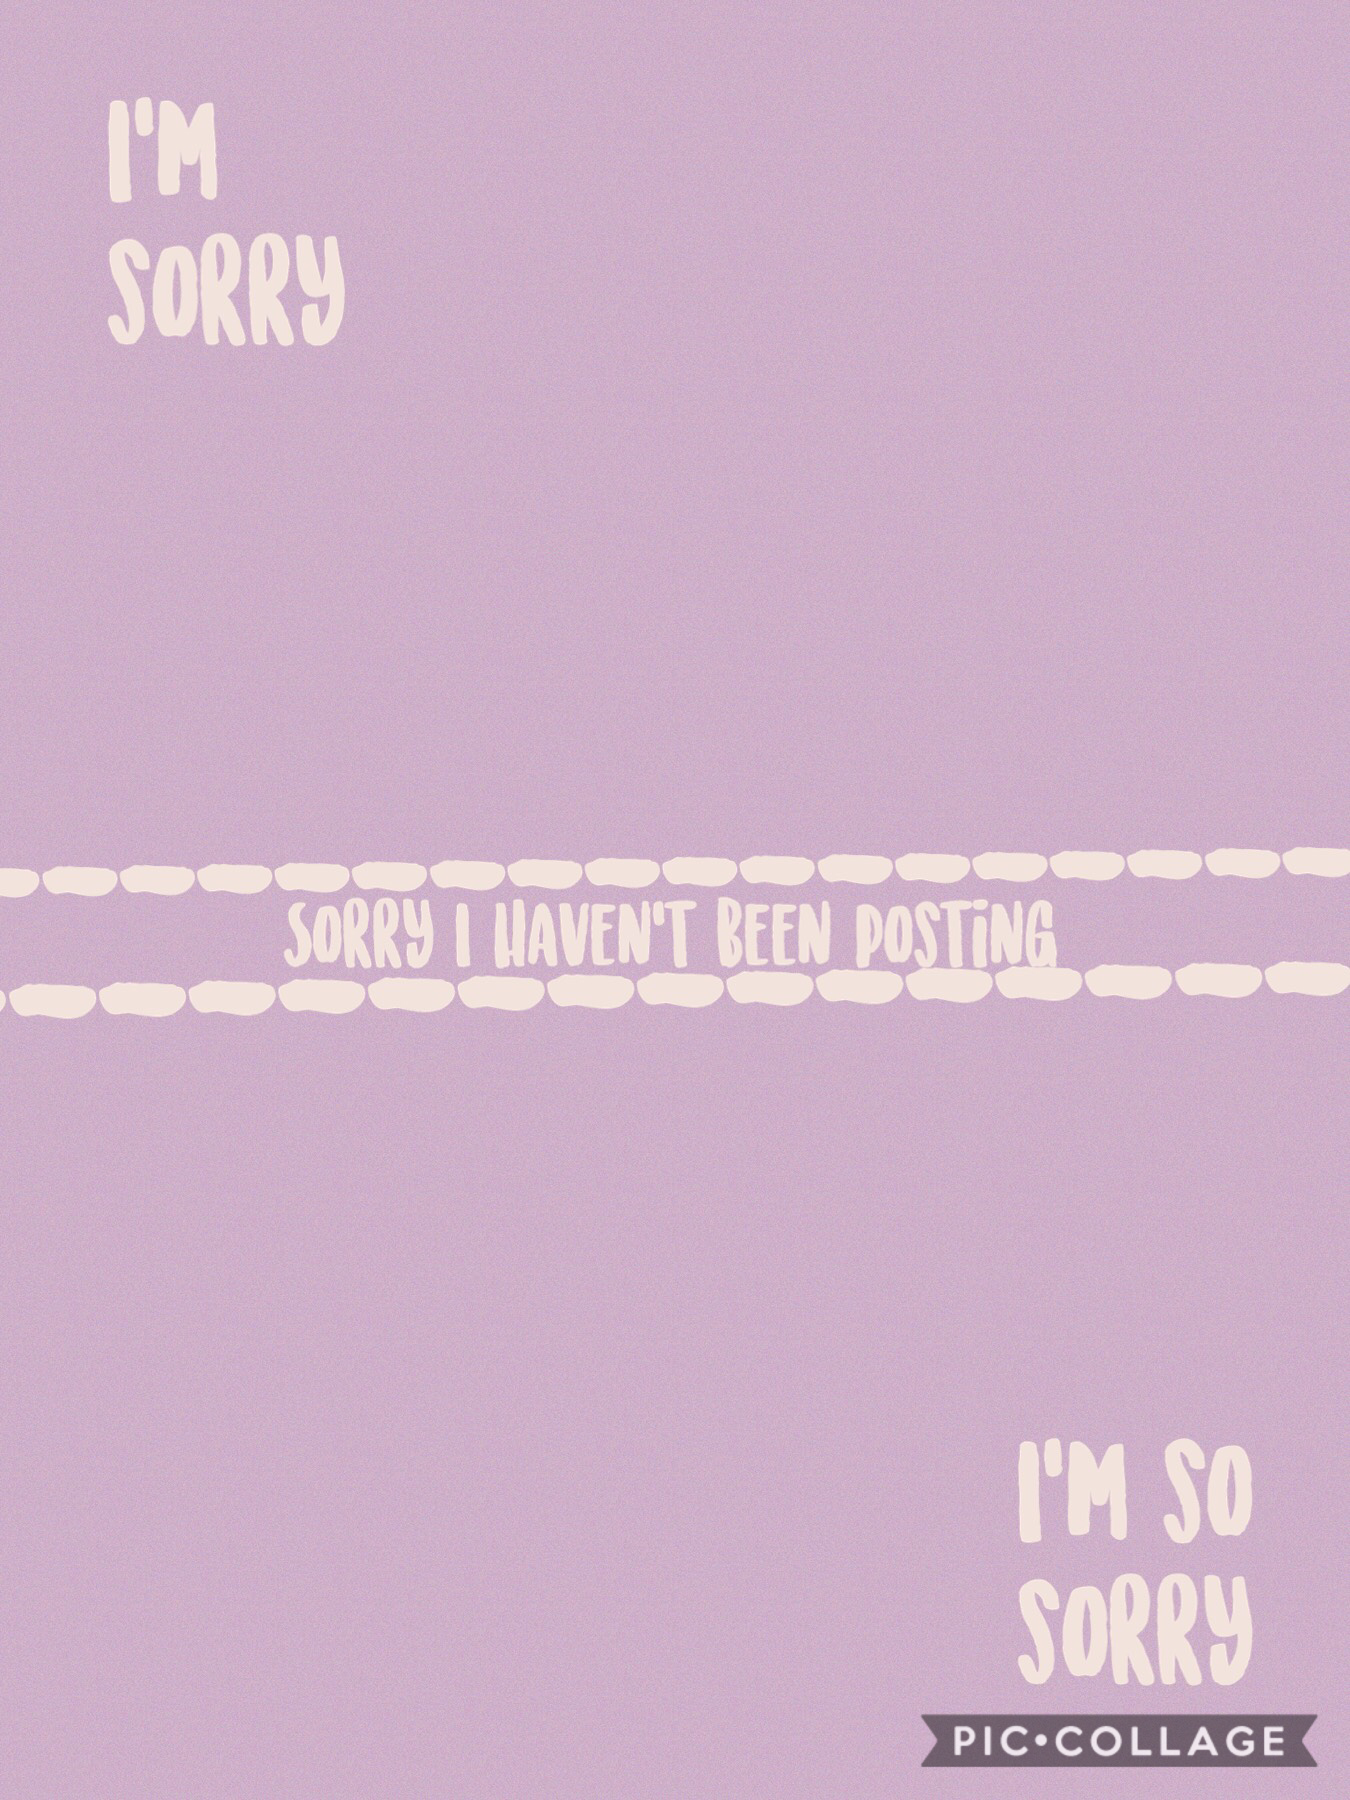 I'm sorry 😖